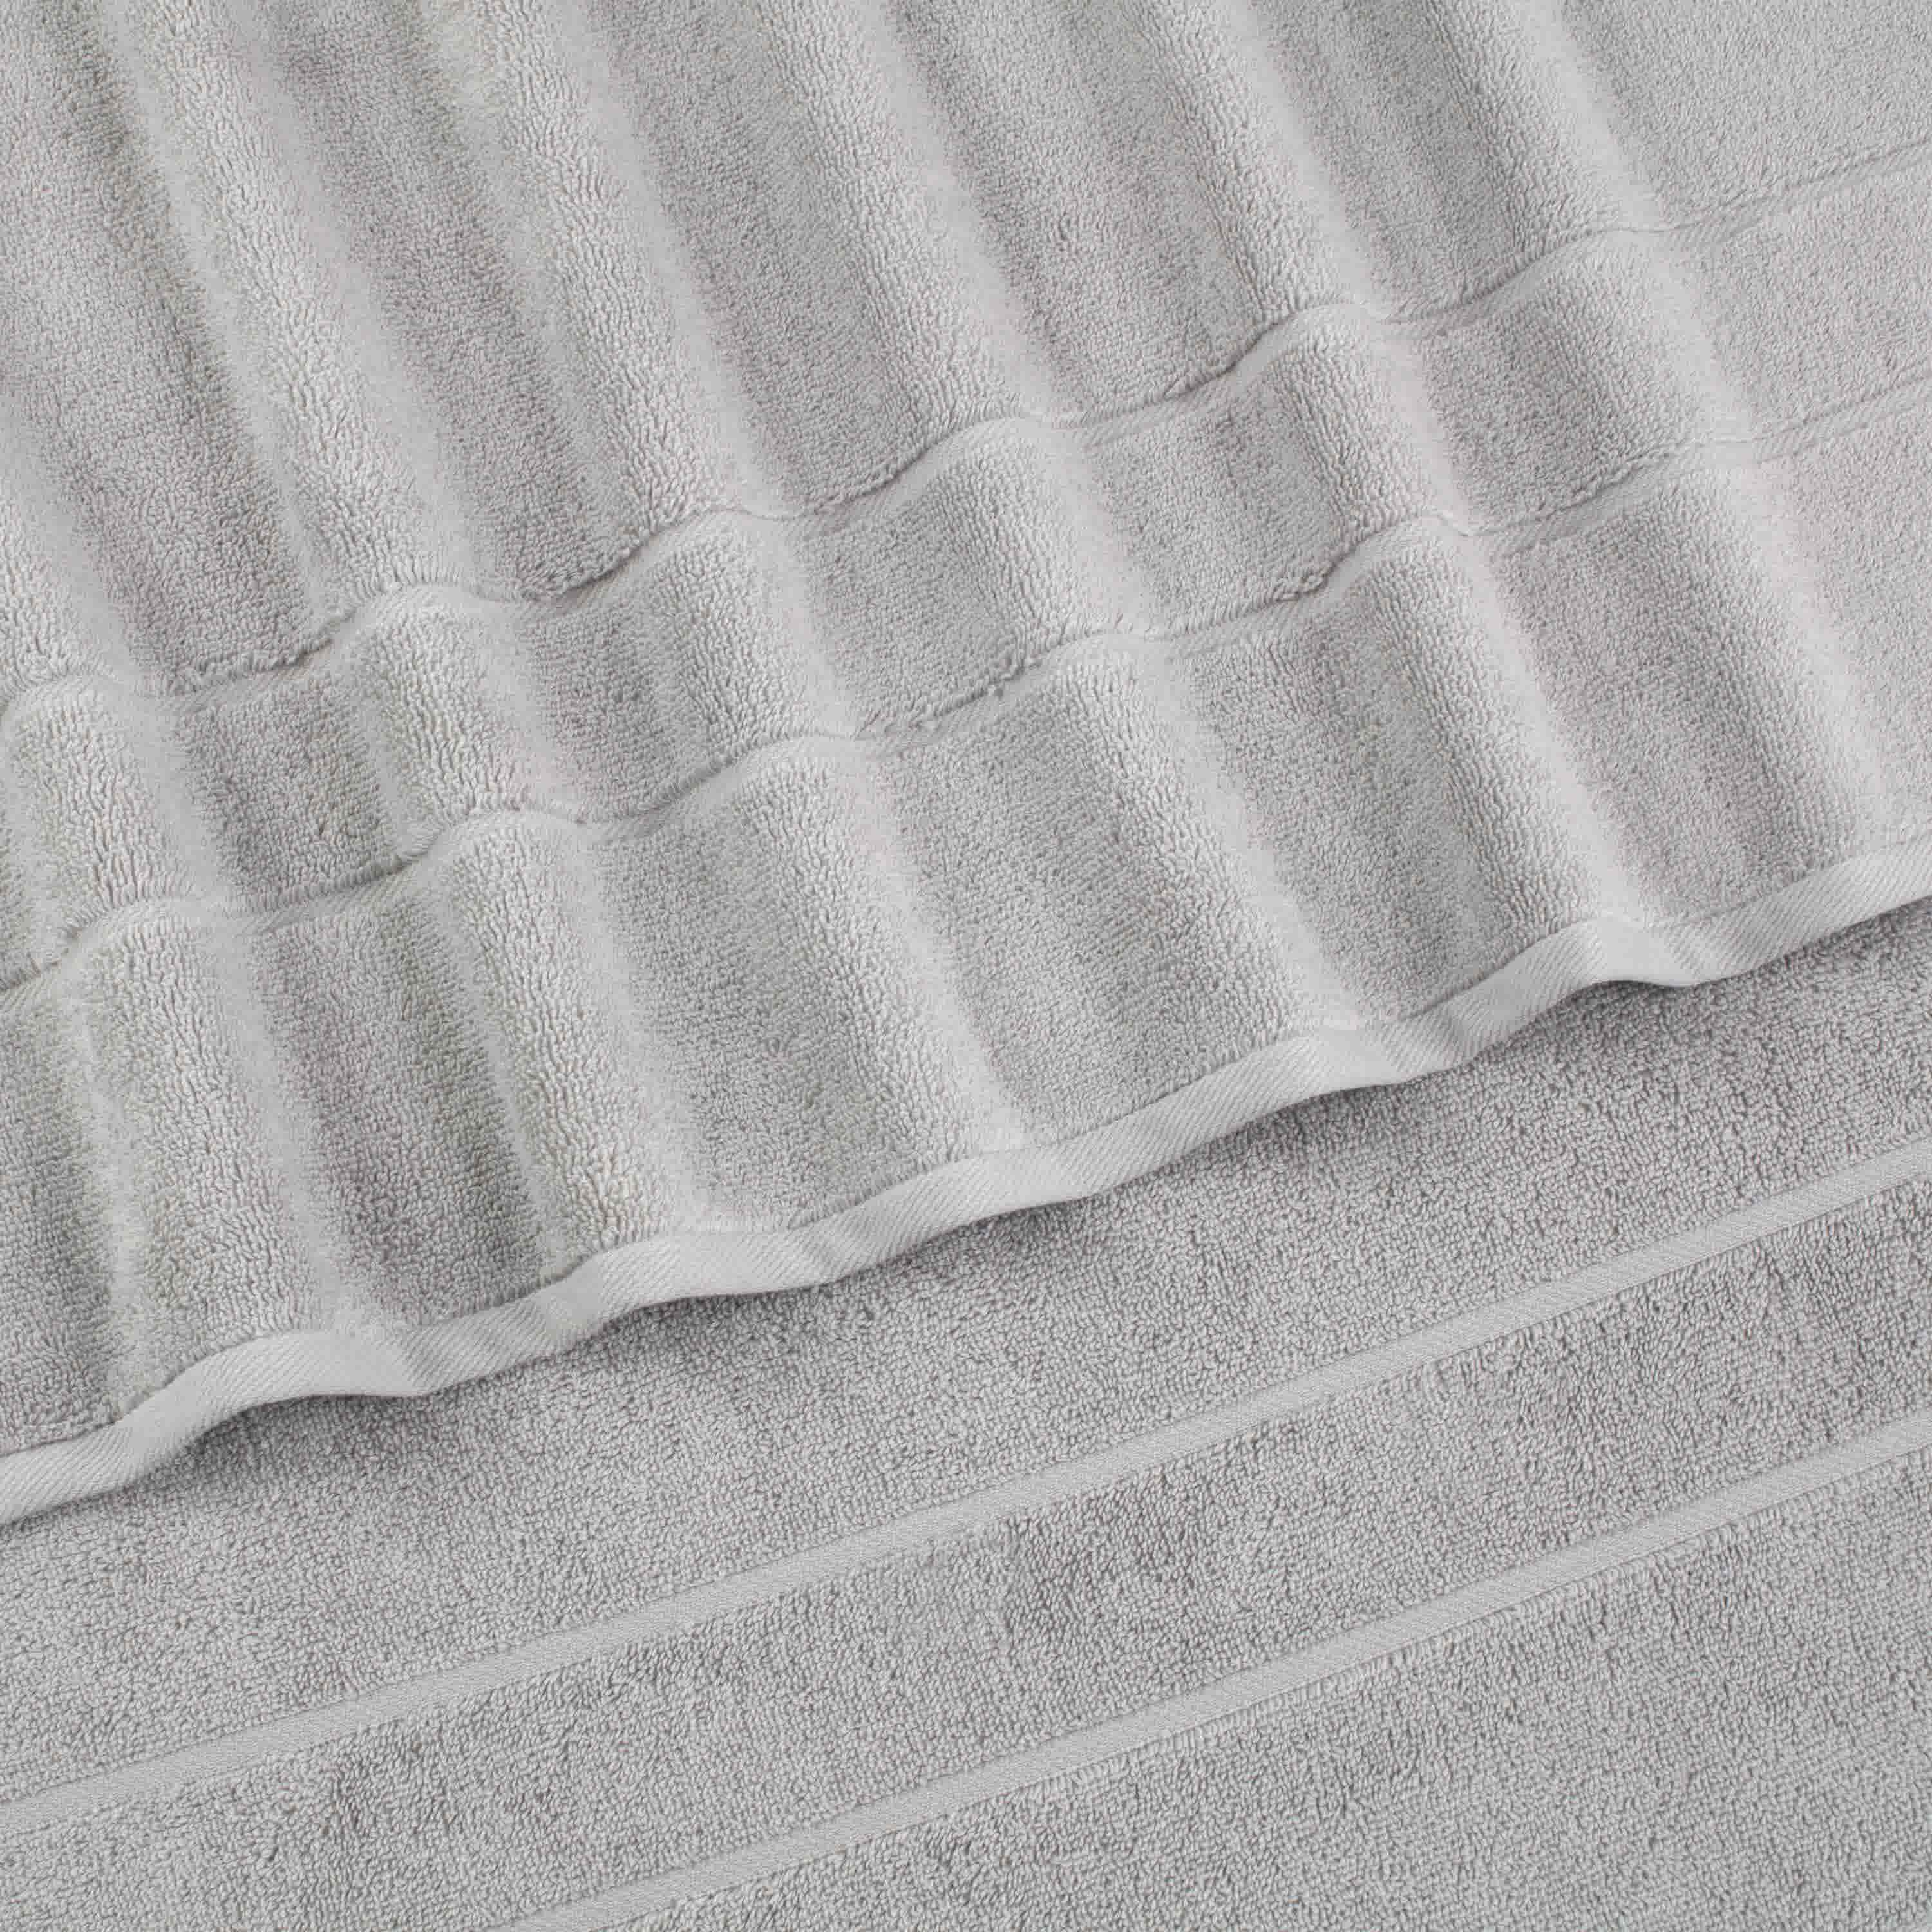 Cotton Bath Towel 2-Pack by Clean Design Home x Martex